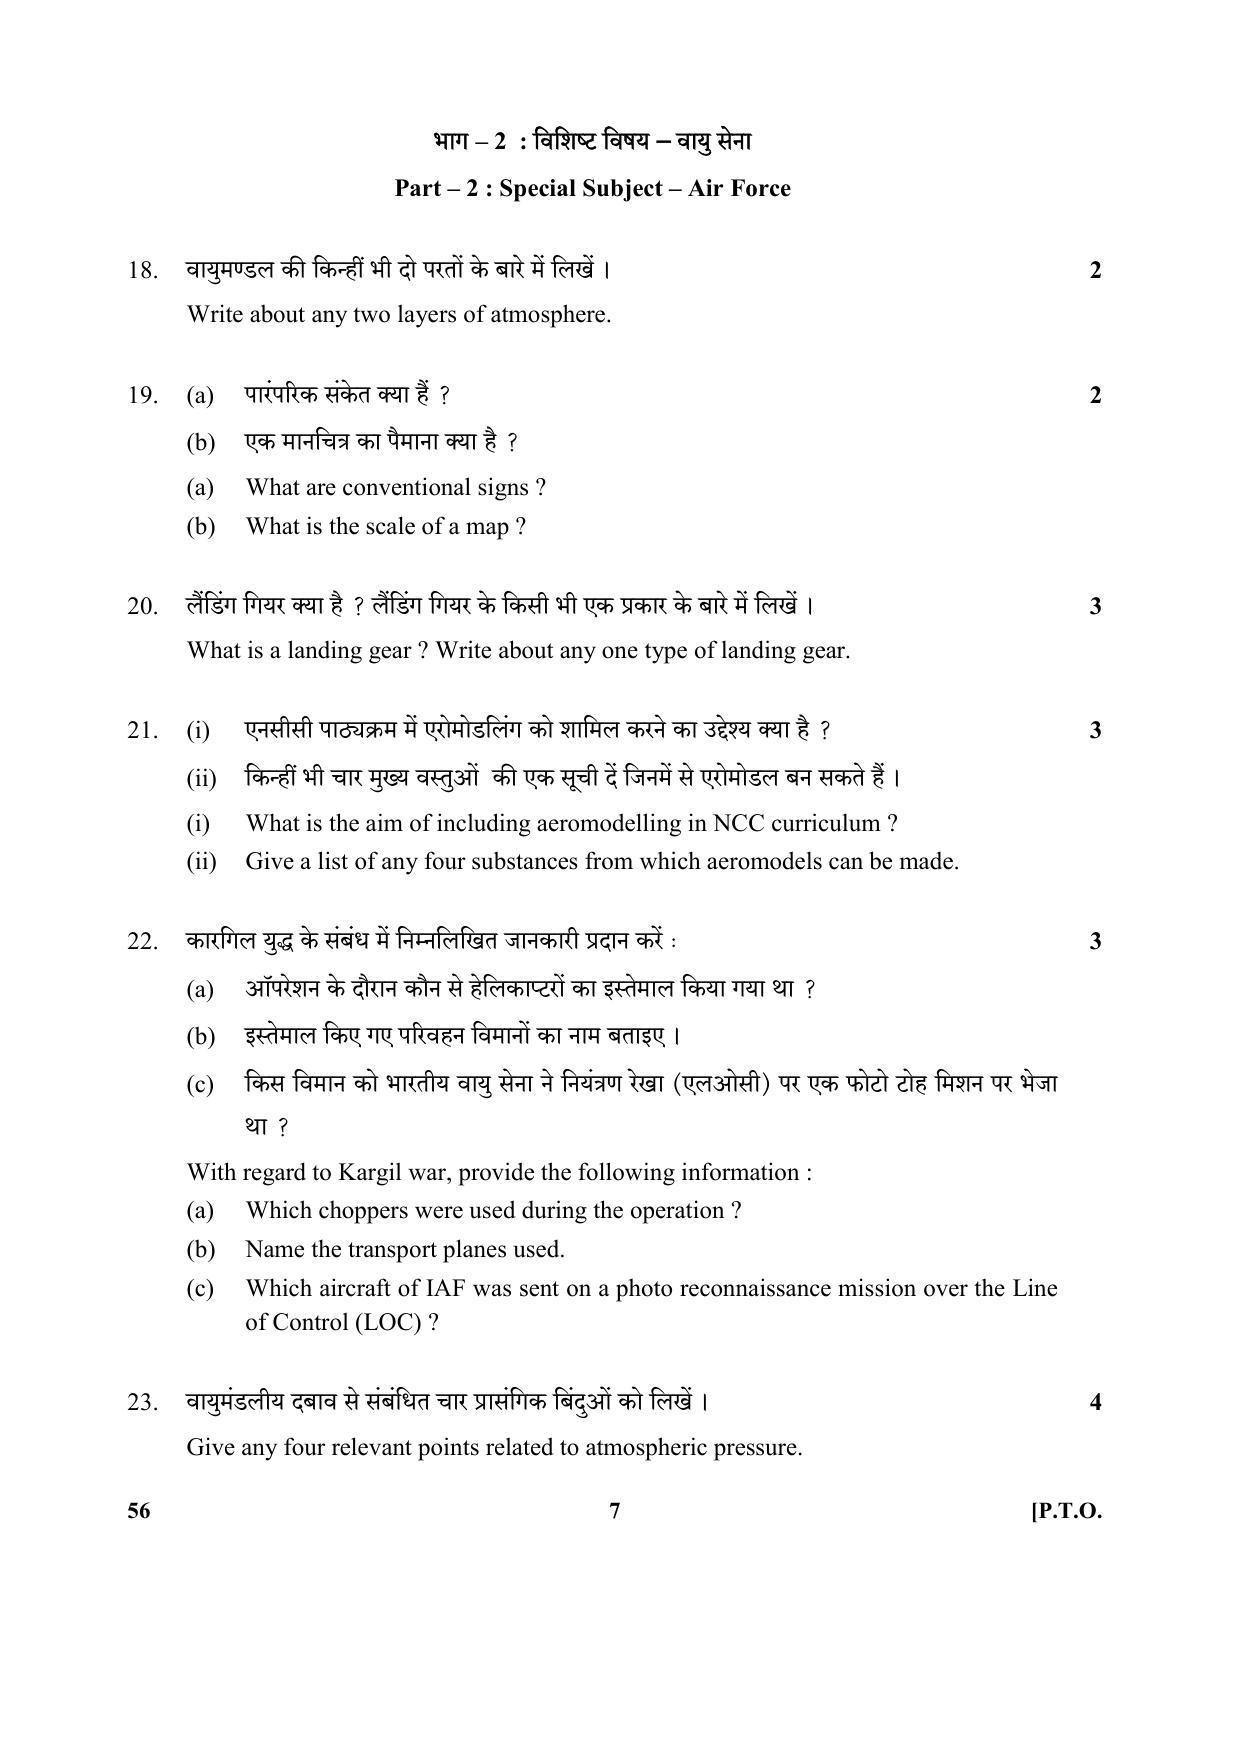 CBSE Class 10 56 (NCC) 2018 Question Paper - Page 7